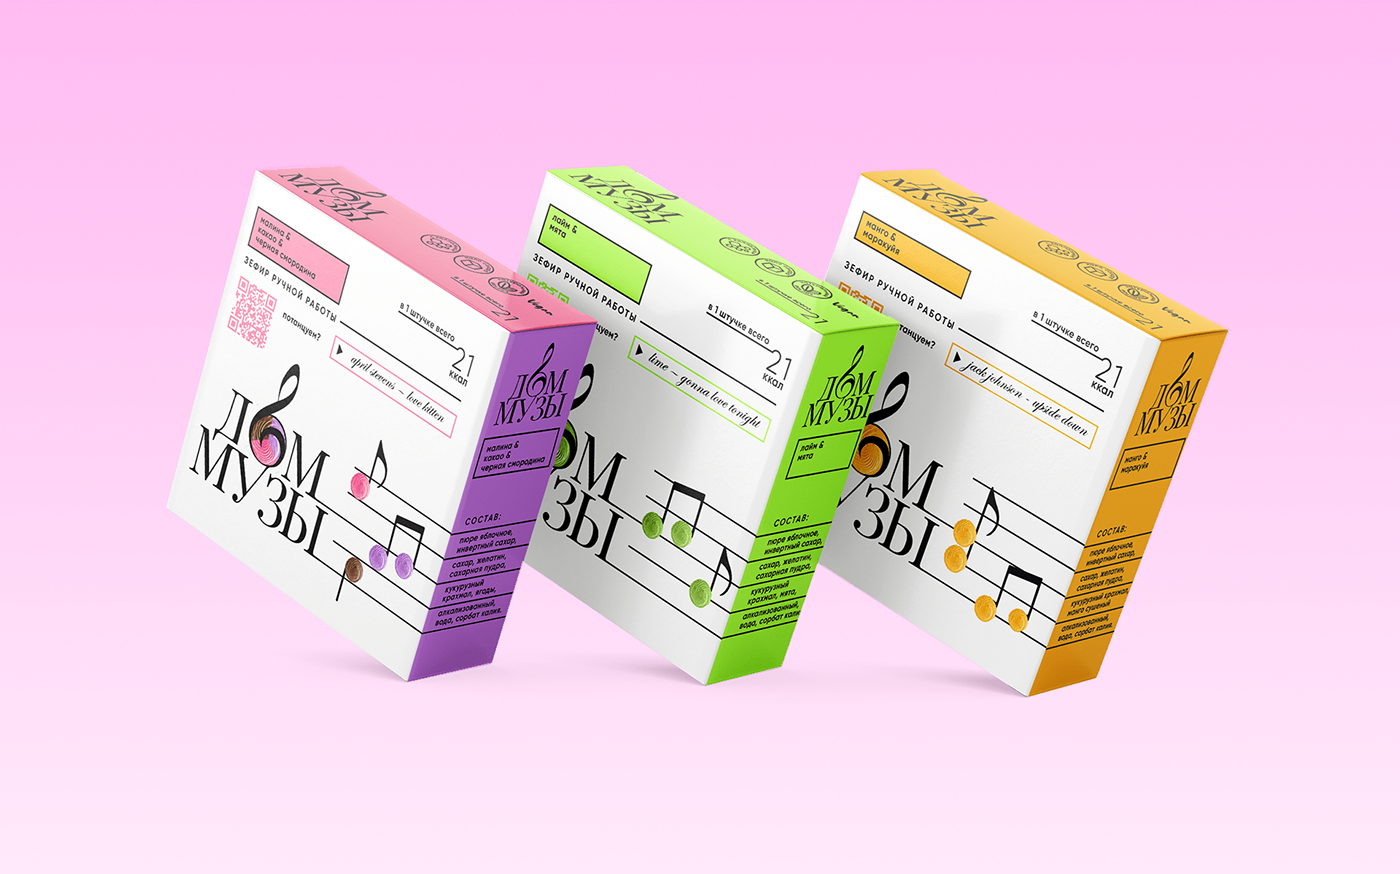 brand identity design marsmallow Packaging packaging design Sweets зефир сладости